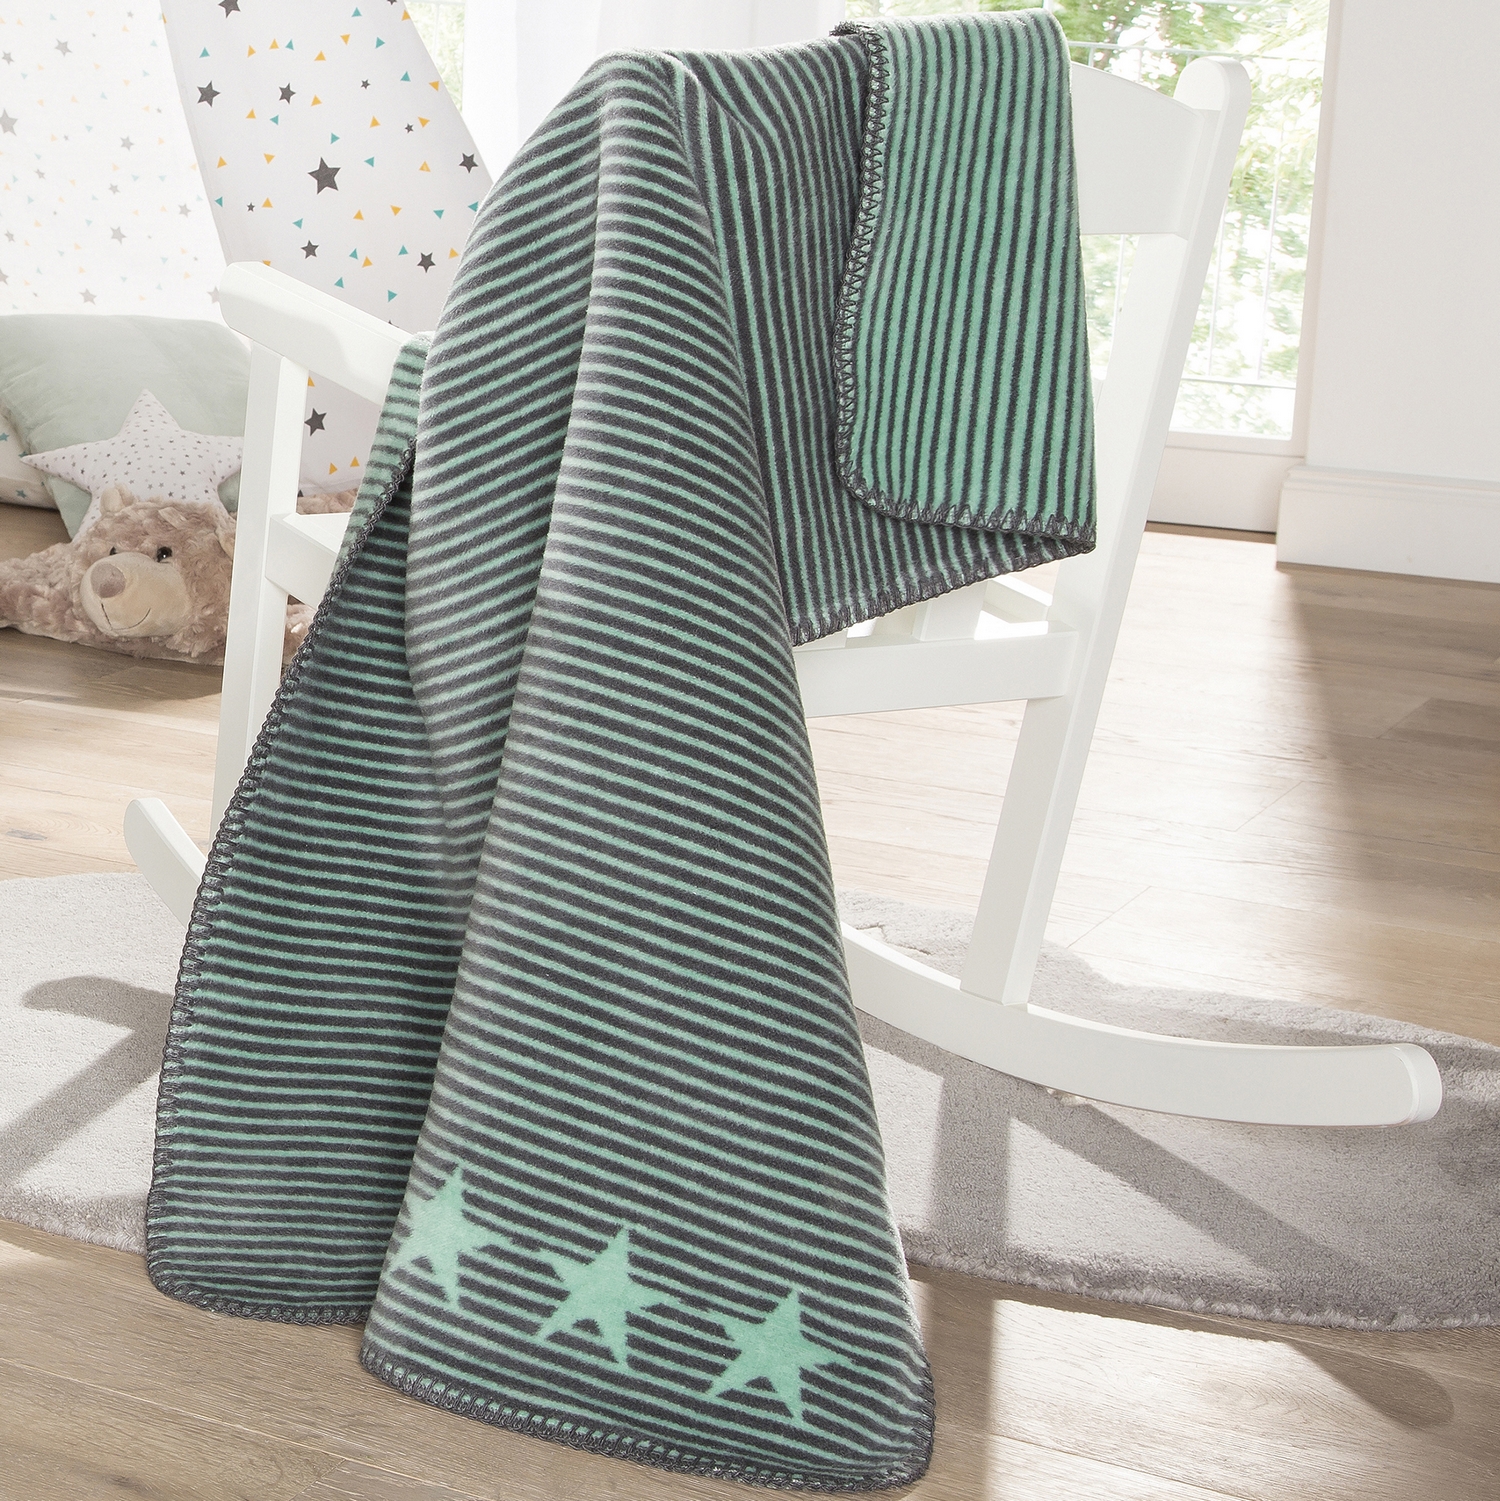 Blanket The - Babydecke Shop vers. - Uni Ibena - Lelu Sofa 4 Couchdecken.de Farben |